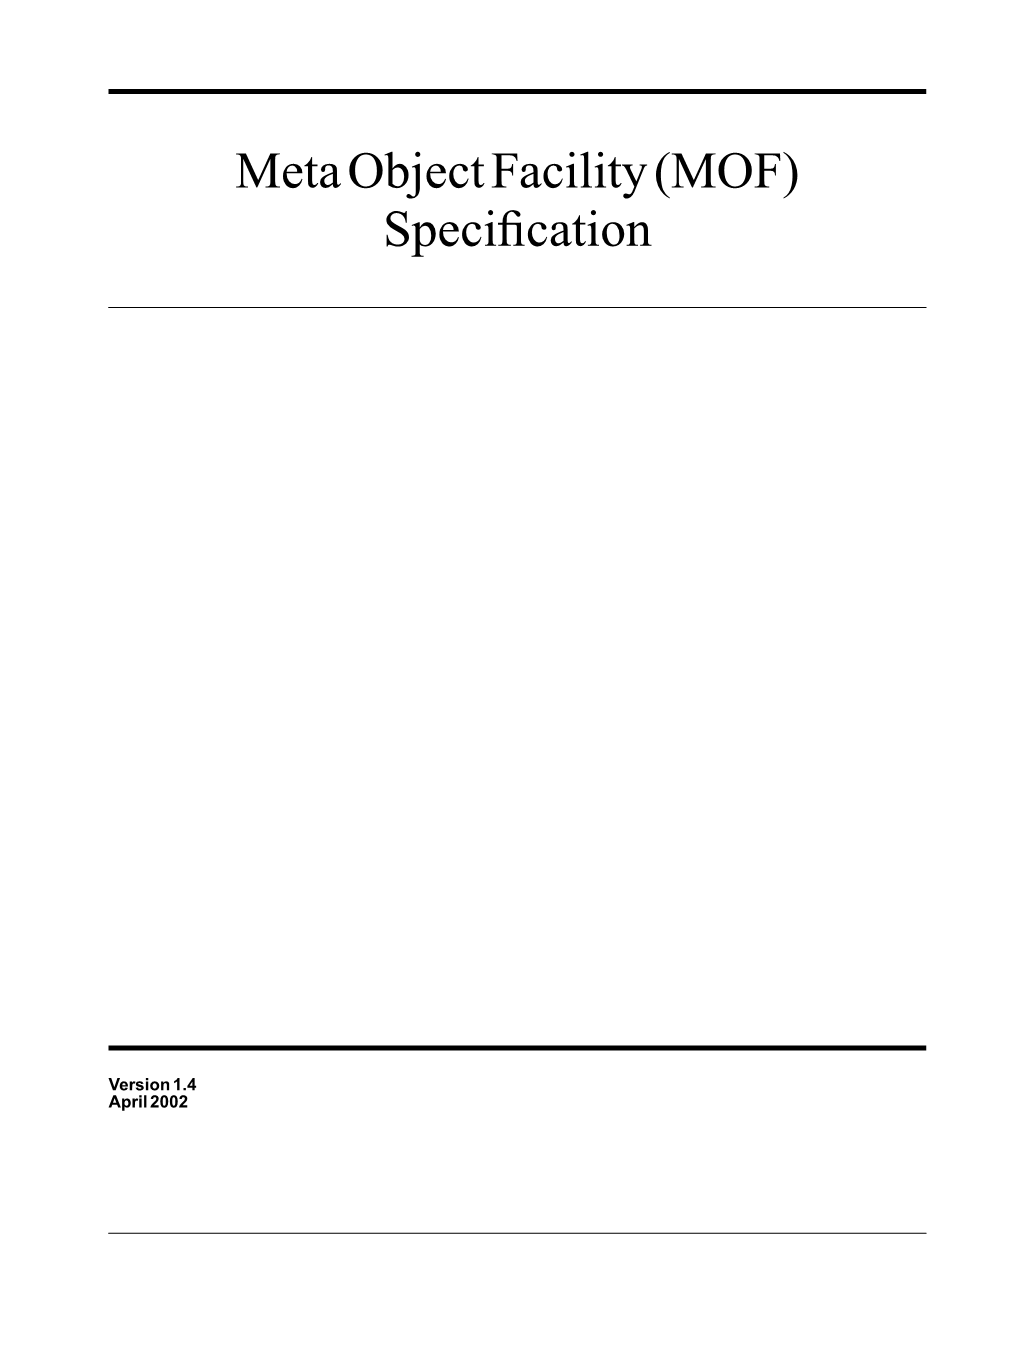 Metaobjectfacility(MOF) Specification